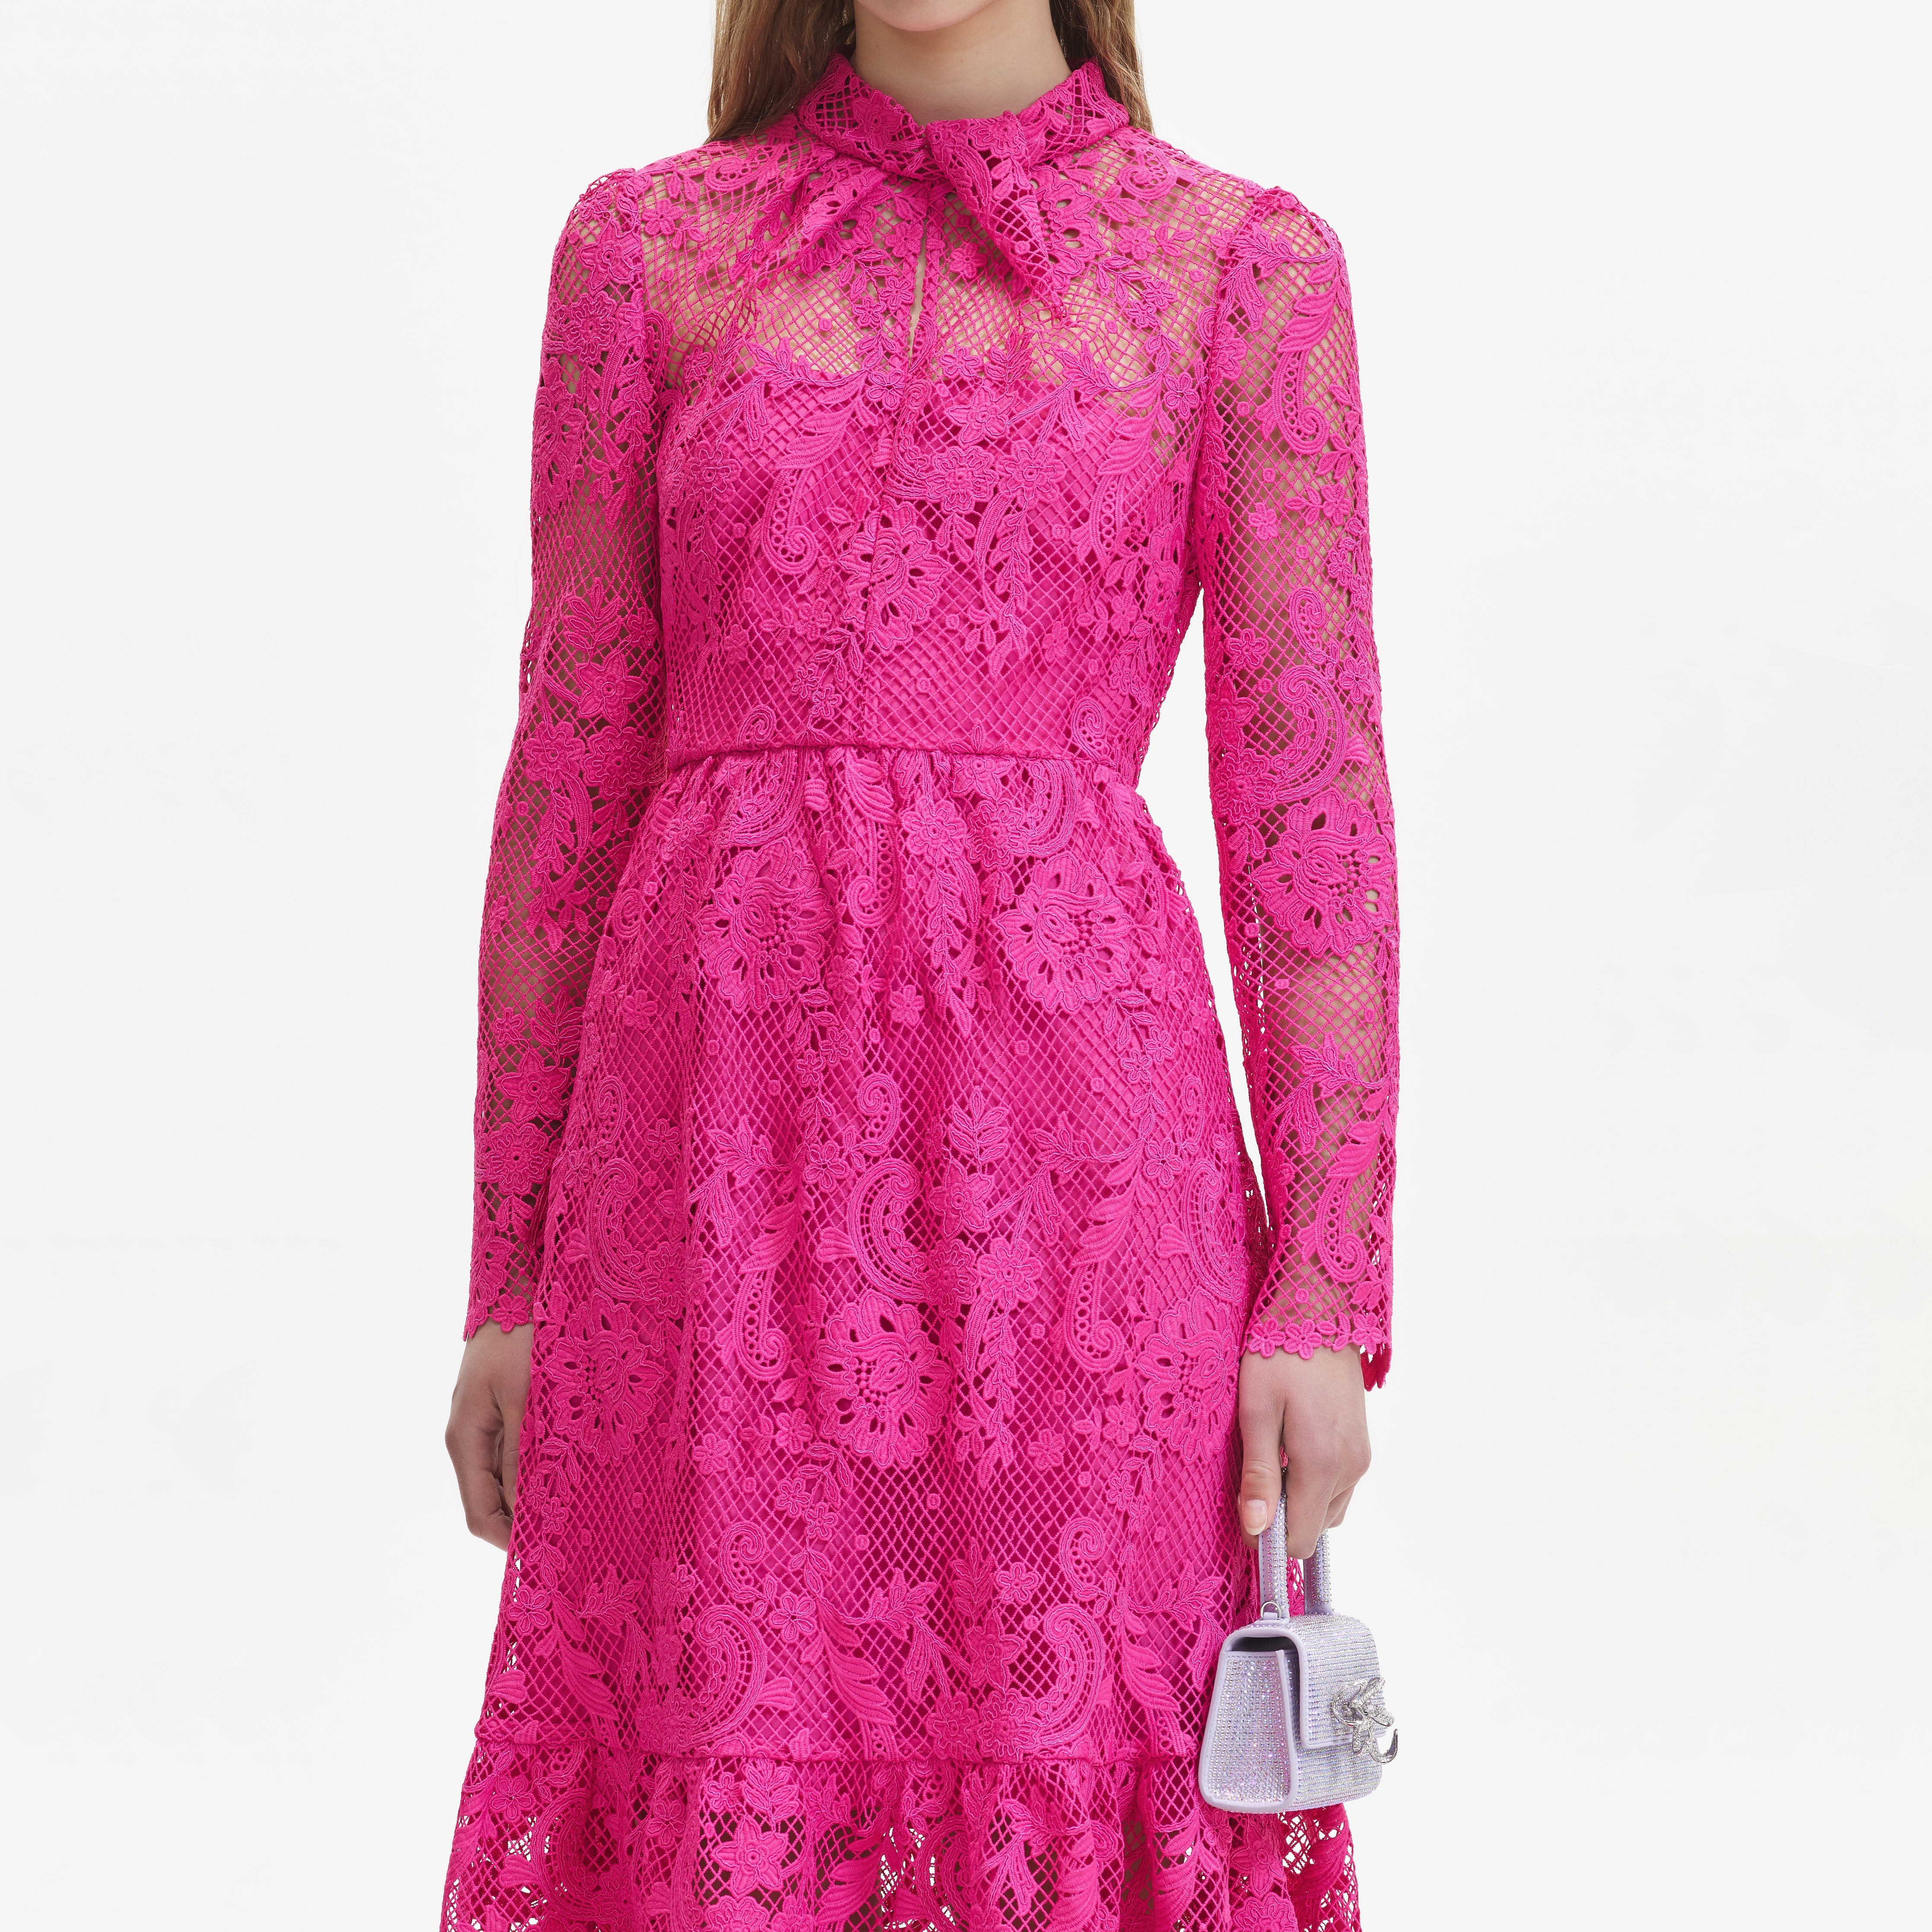 Lace dress - Powder pink - Ladies | H&M IN